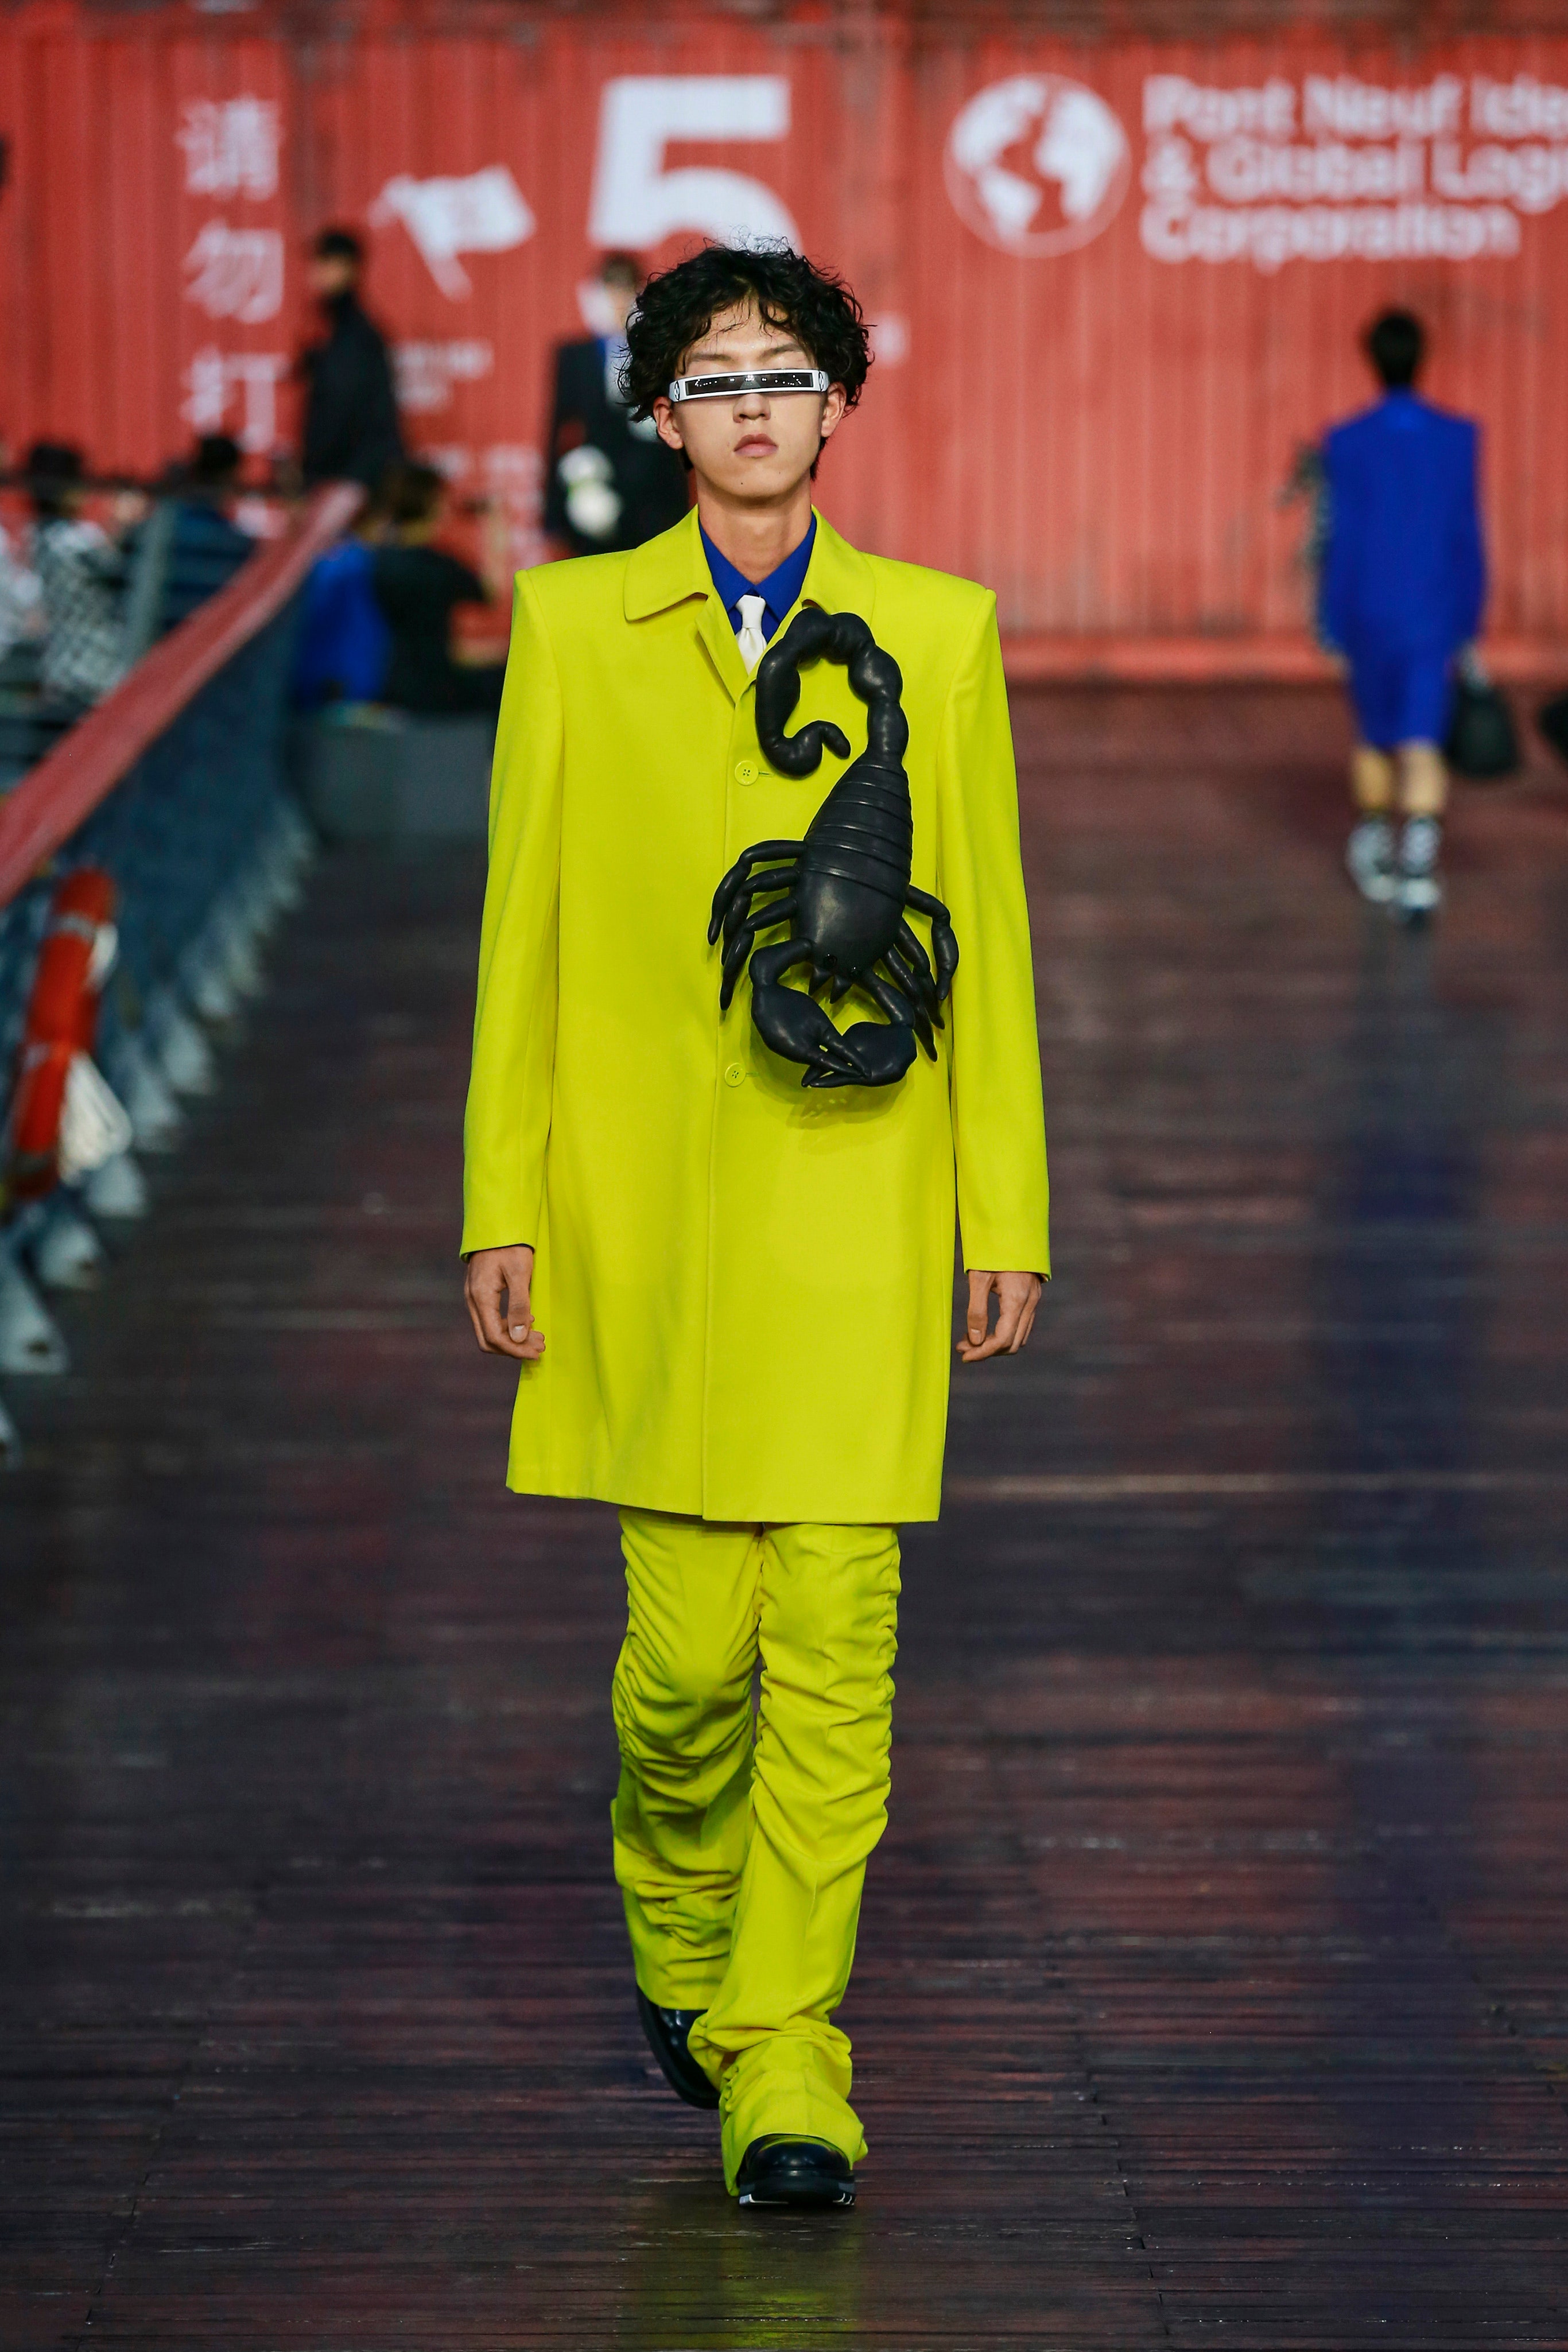 Louis Vuitton Men's FW21 Neon Man Pattern Printing Sports Sleeveless